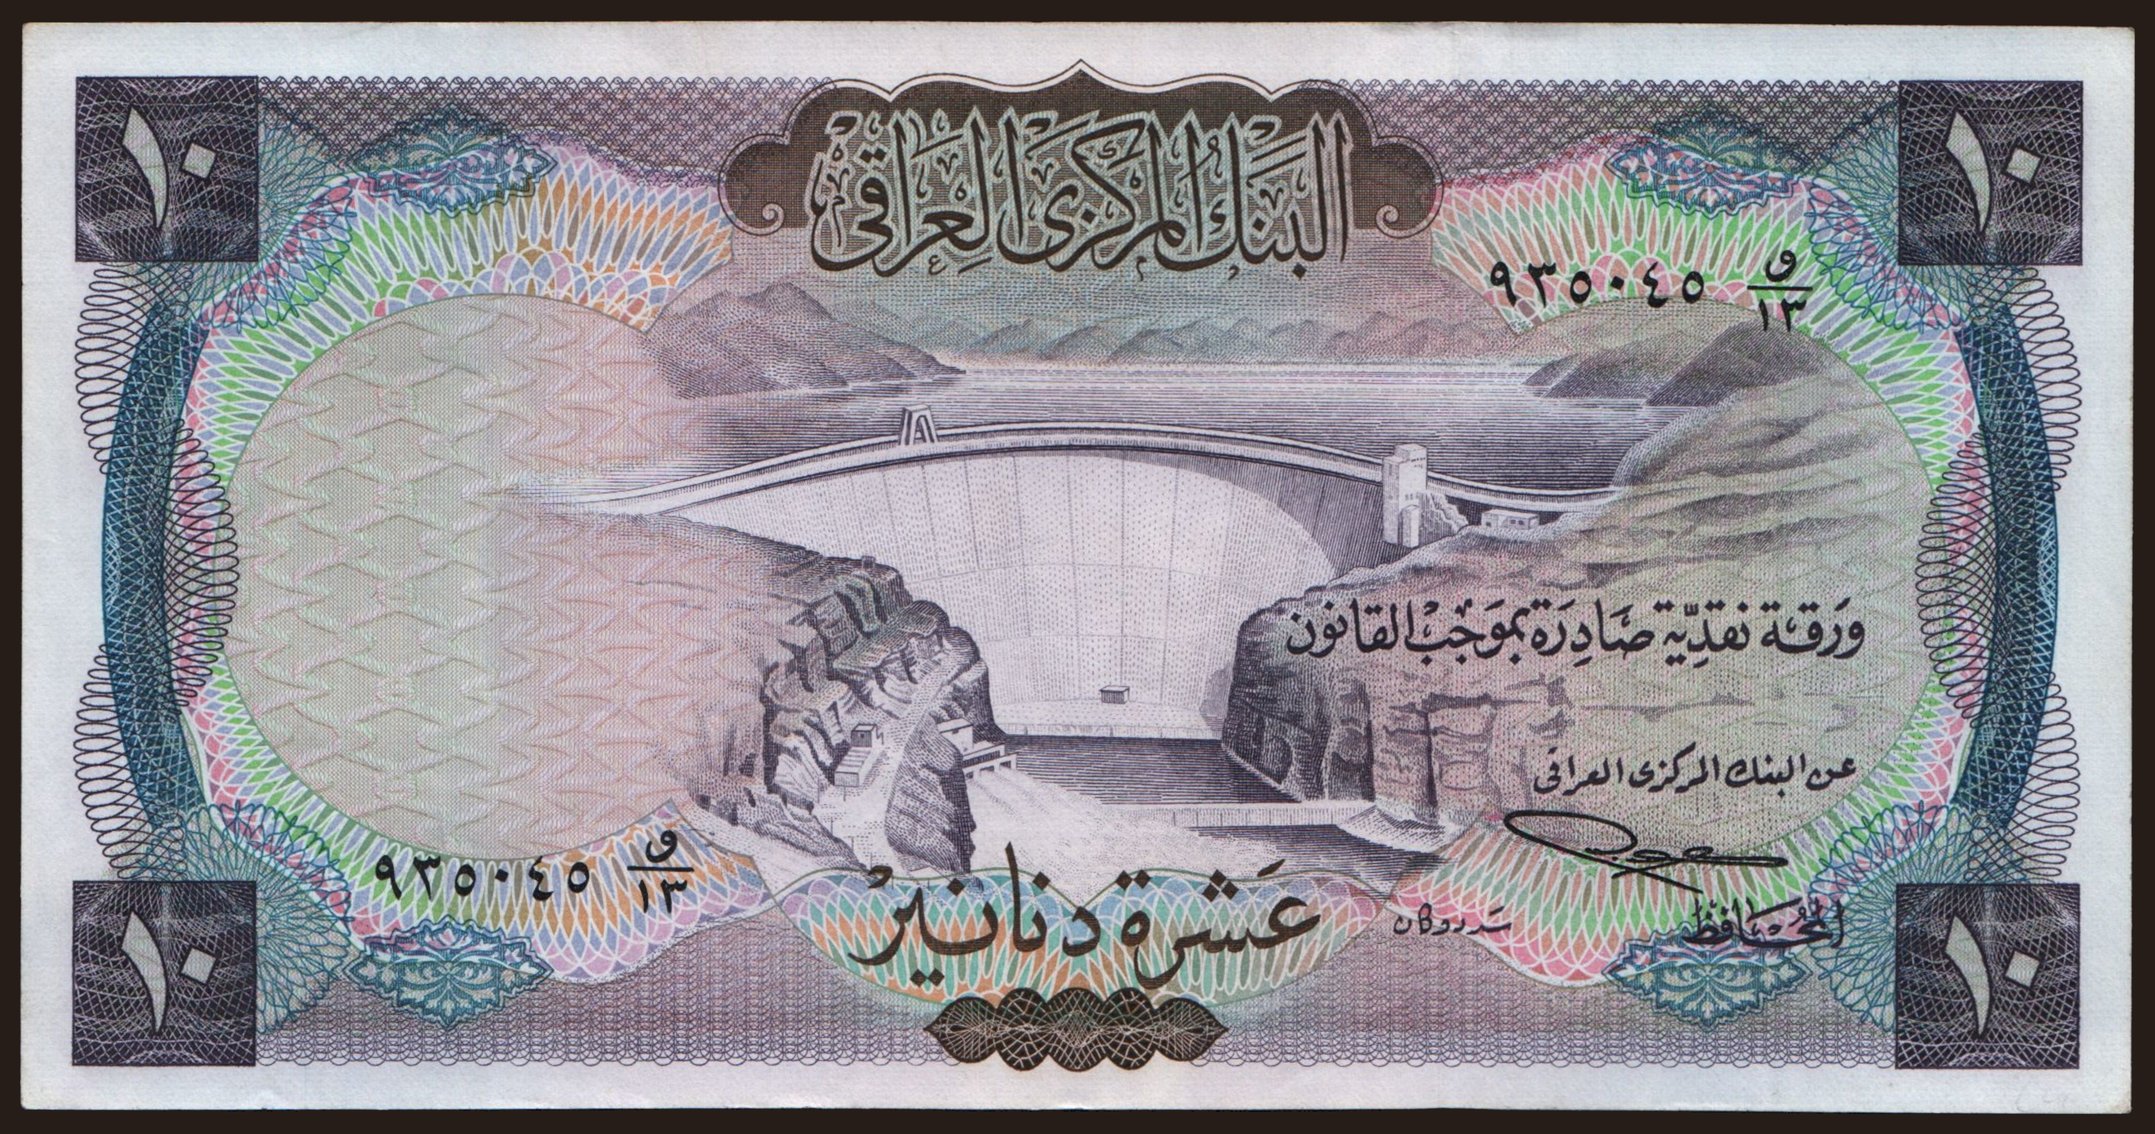 10 dinars, 1971